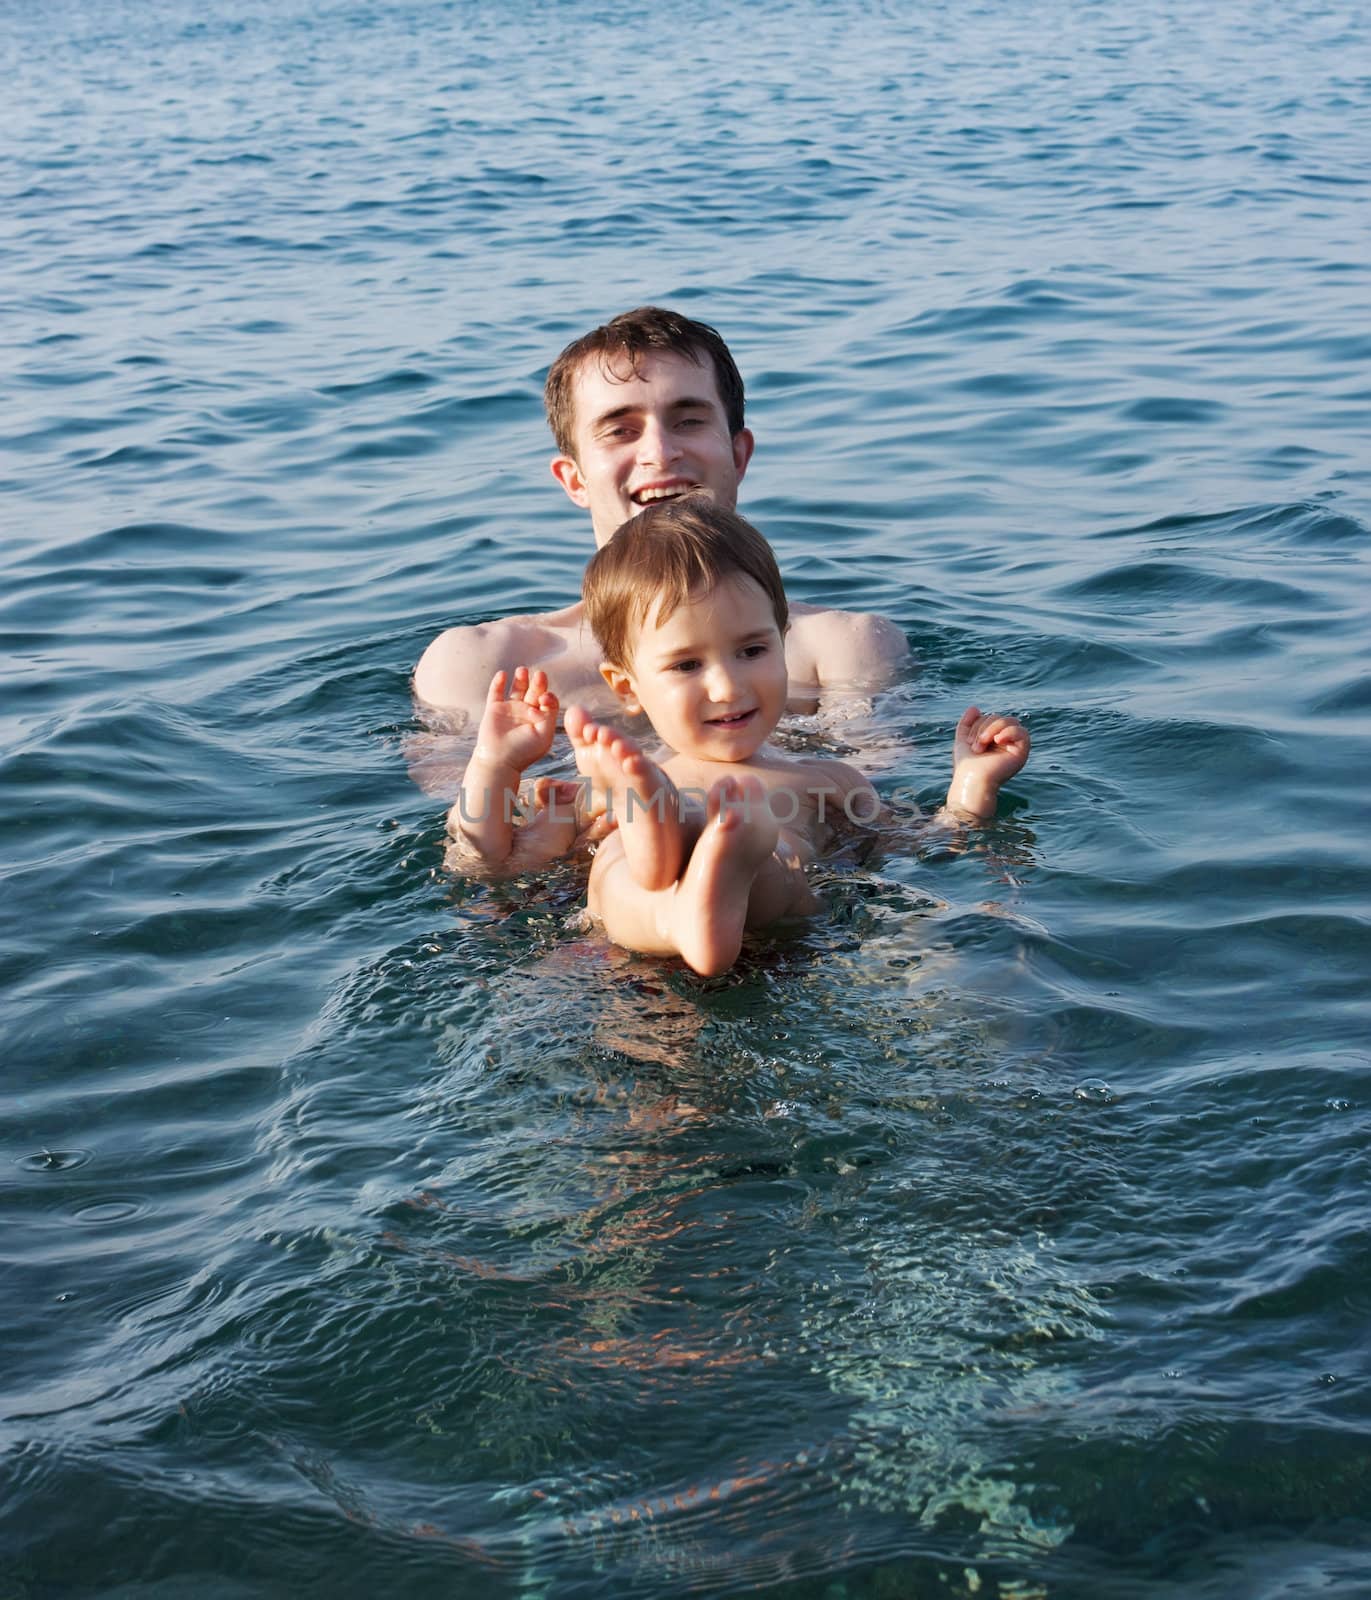 Father teaching his son to swim